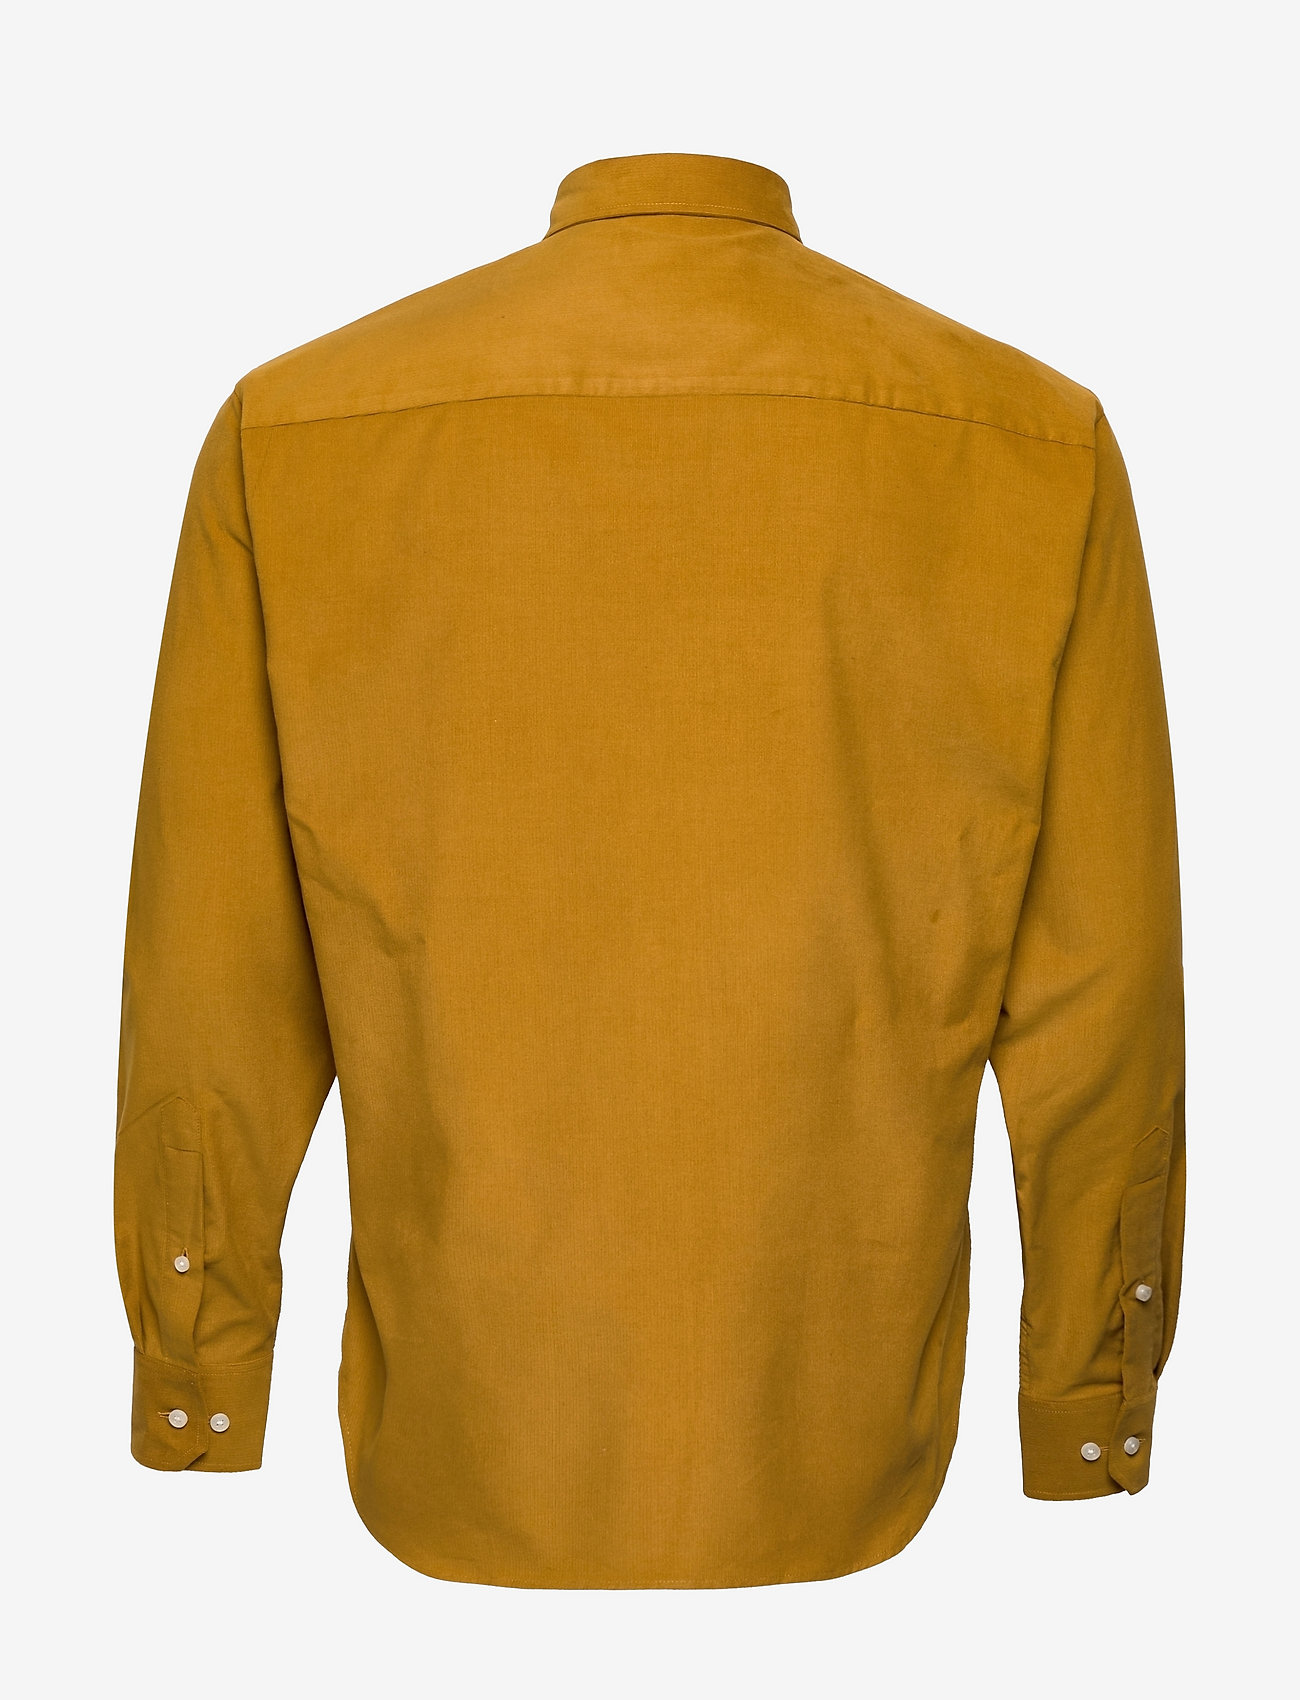 Bosweel Shirts Est. 1937 - Short cut - basic-hemden - yellow - 1